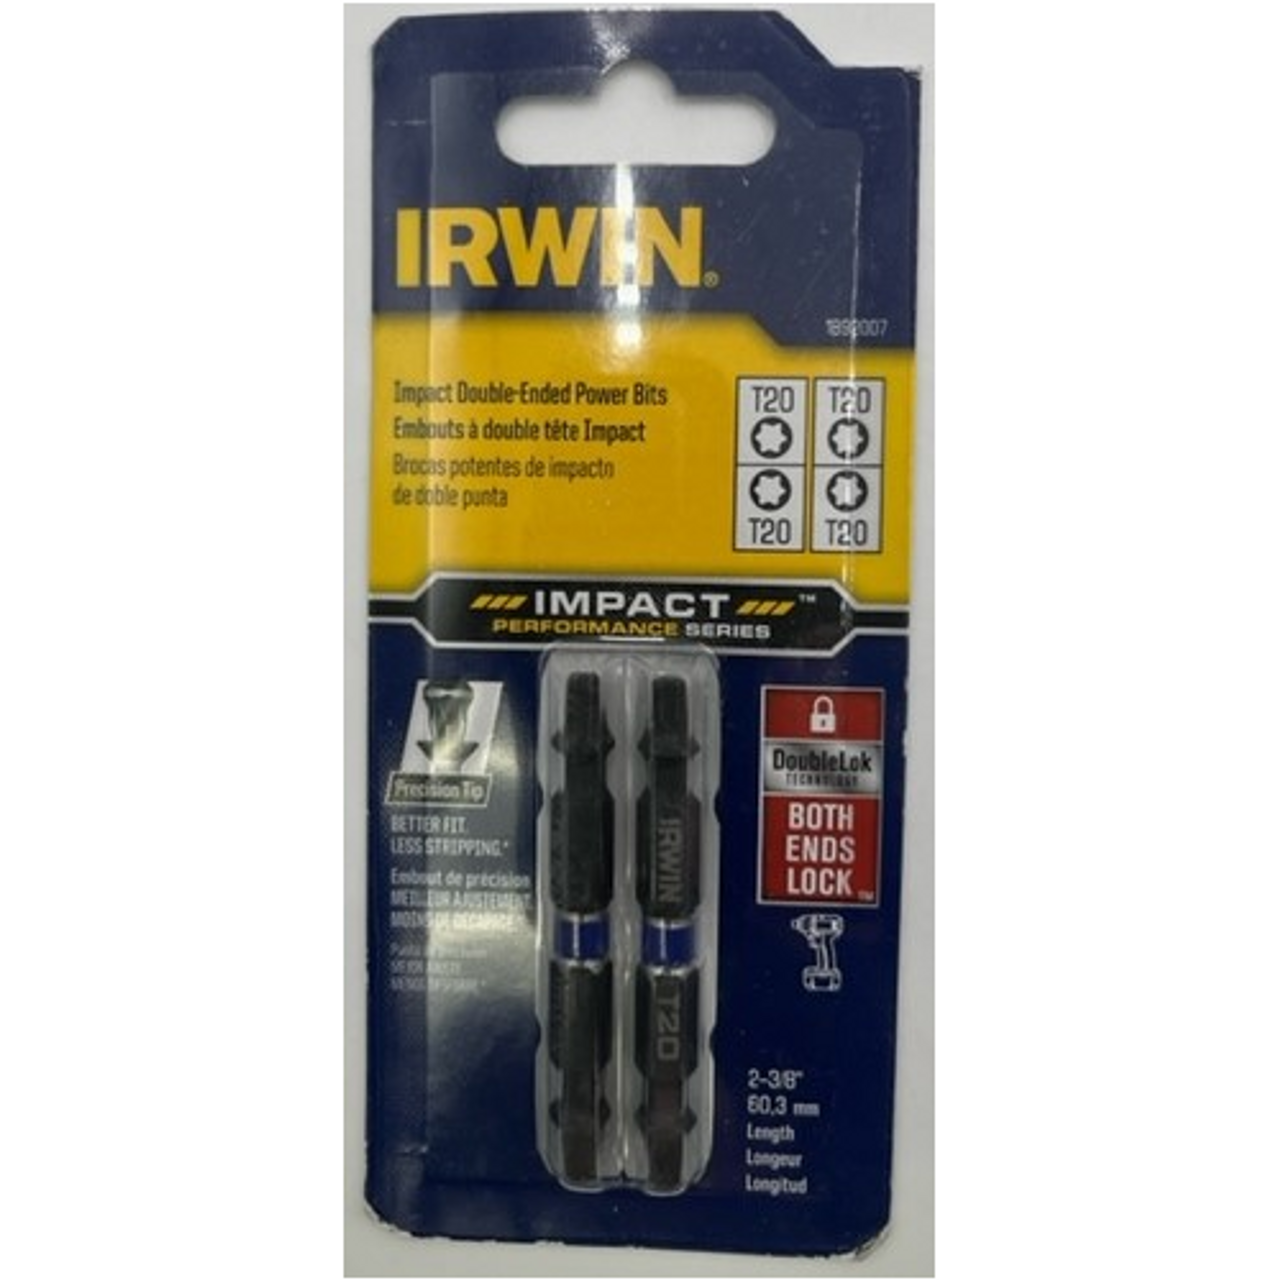 Irwin IWAF32DETX202 Torx Doujble End Impact Power Insert Bit T20 x 2 inch 1892007 - 2 pack